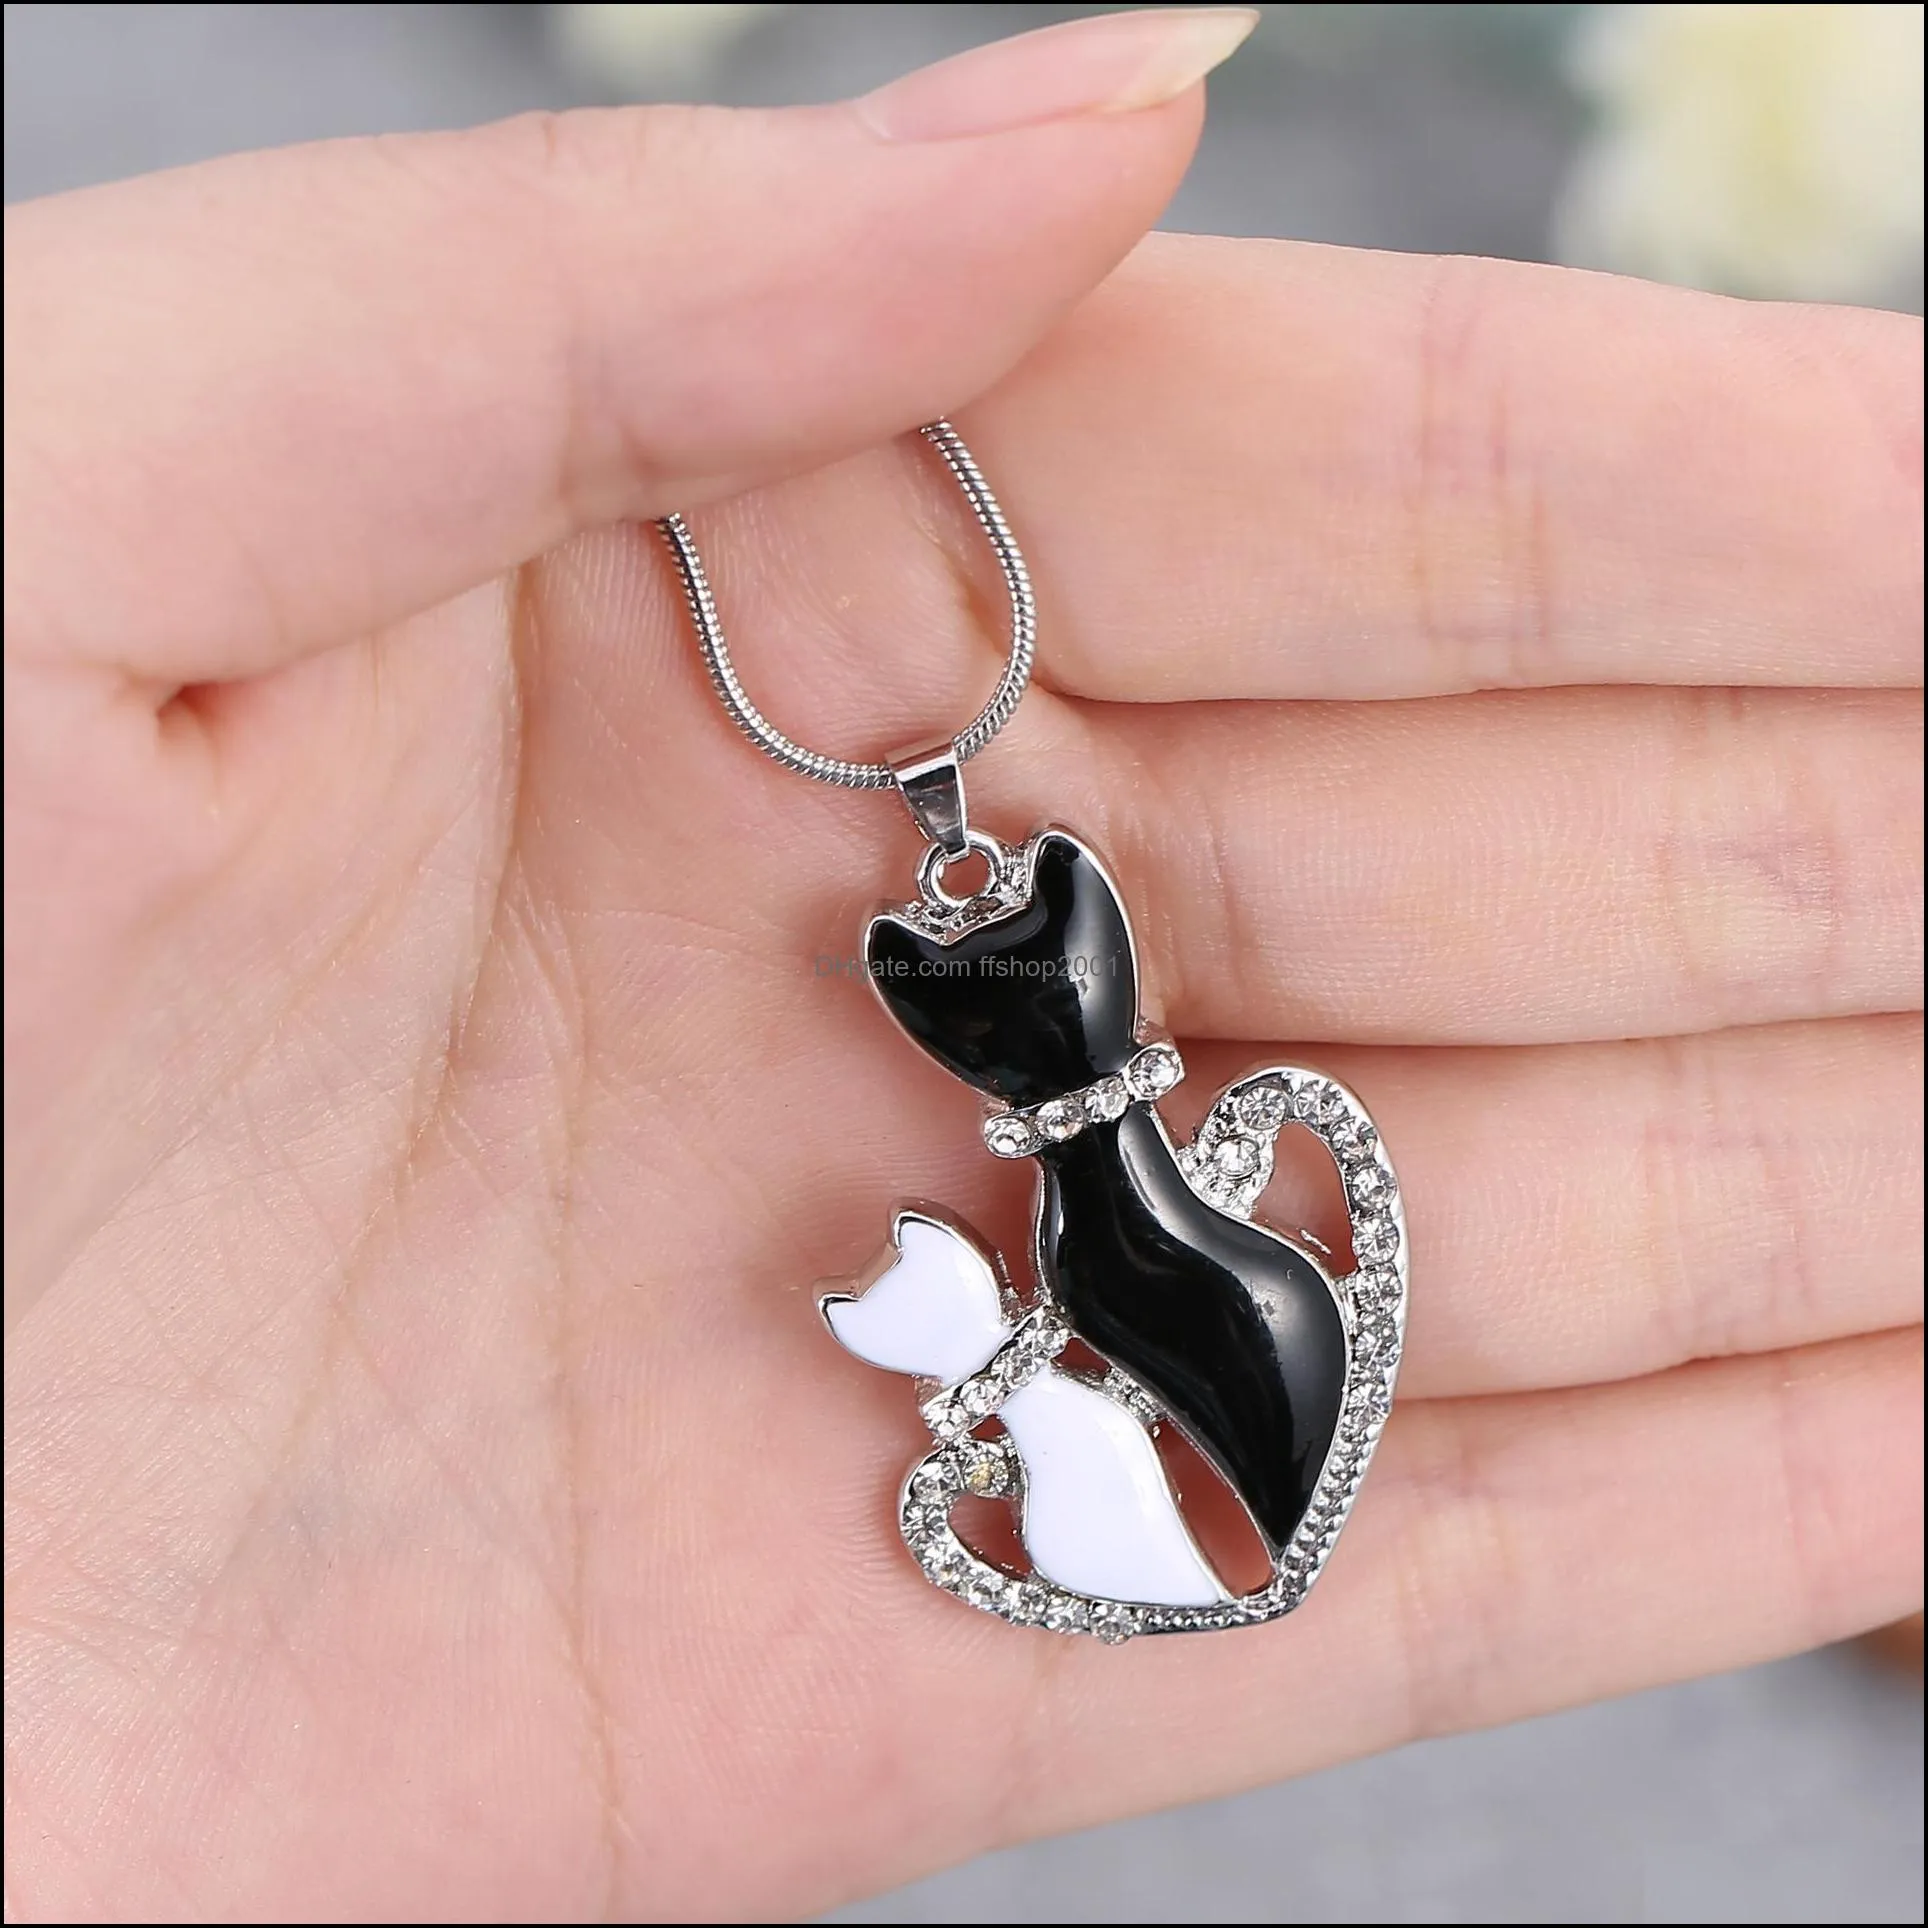 pendant necklace women fashion cute black white cats pendant chain necklace gifts chain necklaces